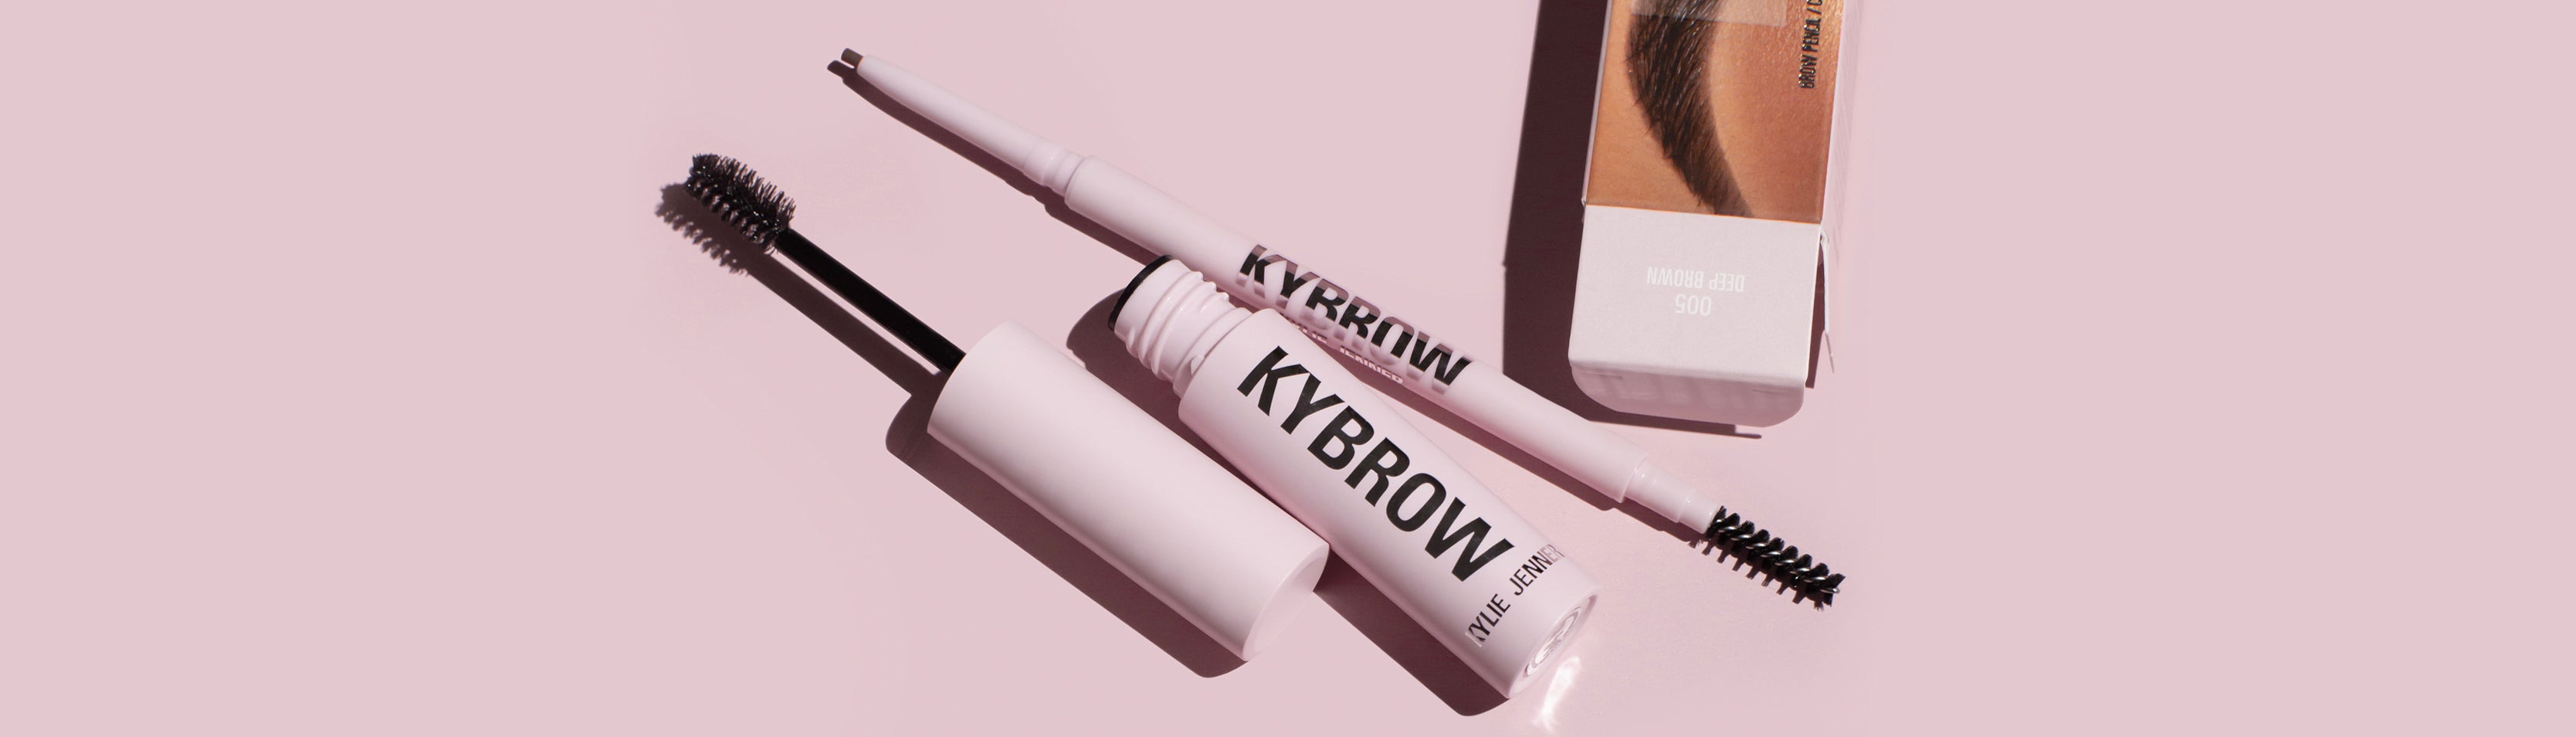 Kylie Cosmetics - Eyebrows - Kits